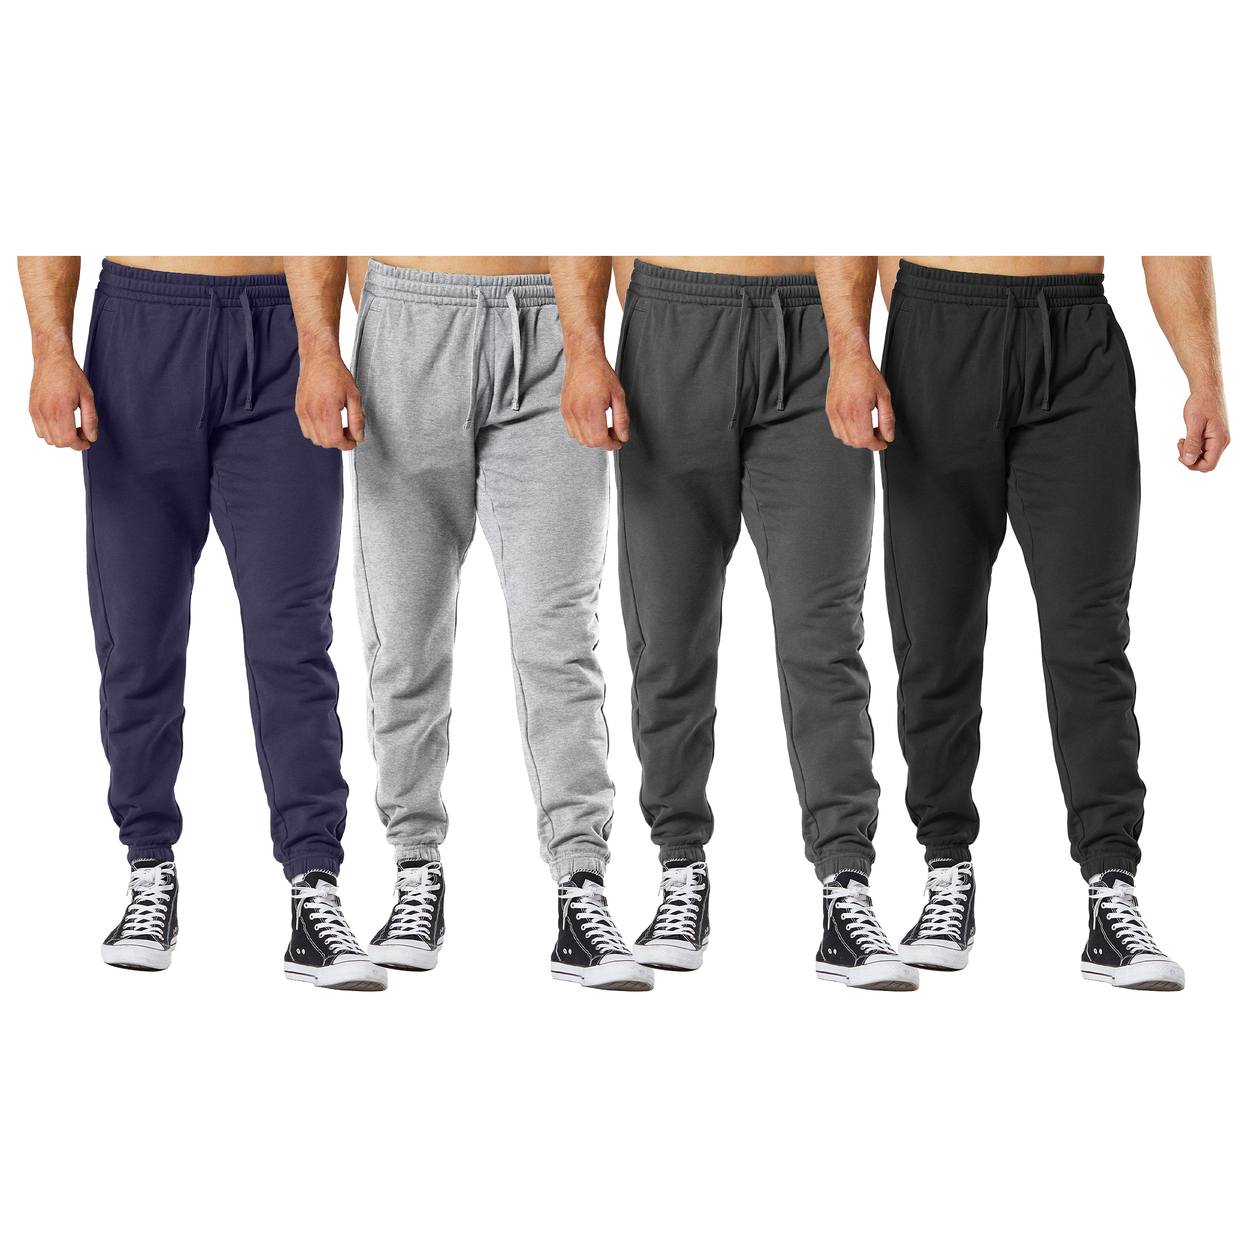 Men's Ultra-Soft Cozy Winter Warm Casual Fleece Lined Sweatpants Jogger - Grey, Xx-large